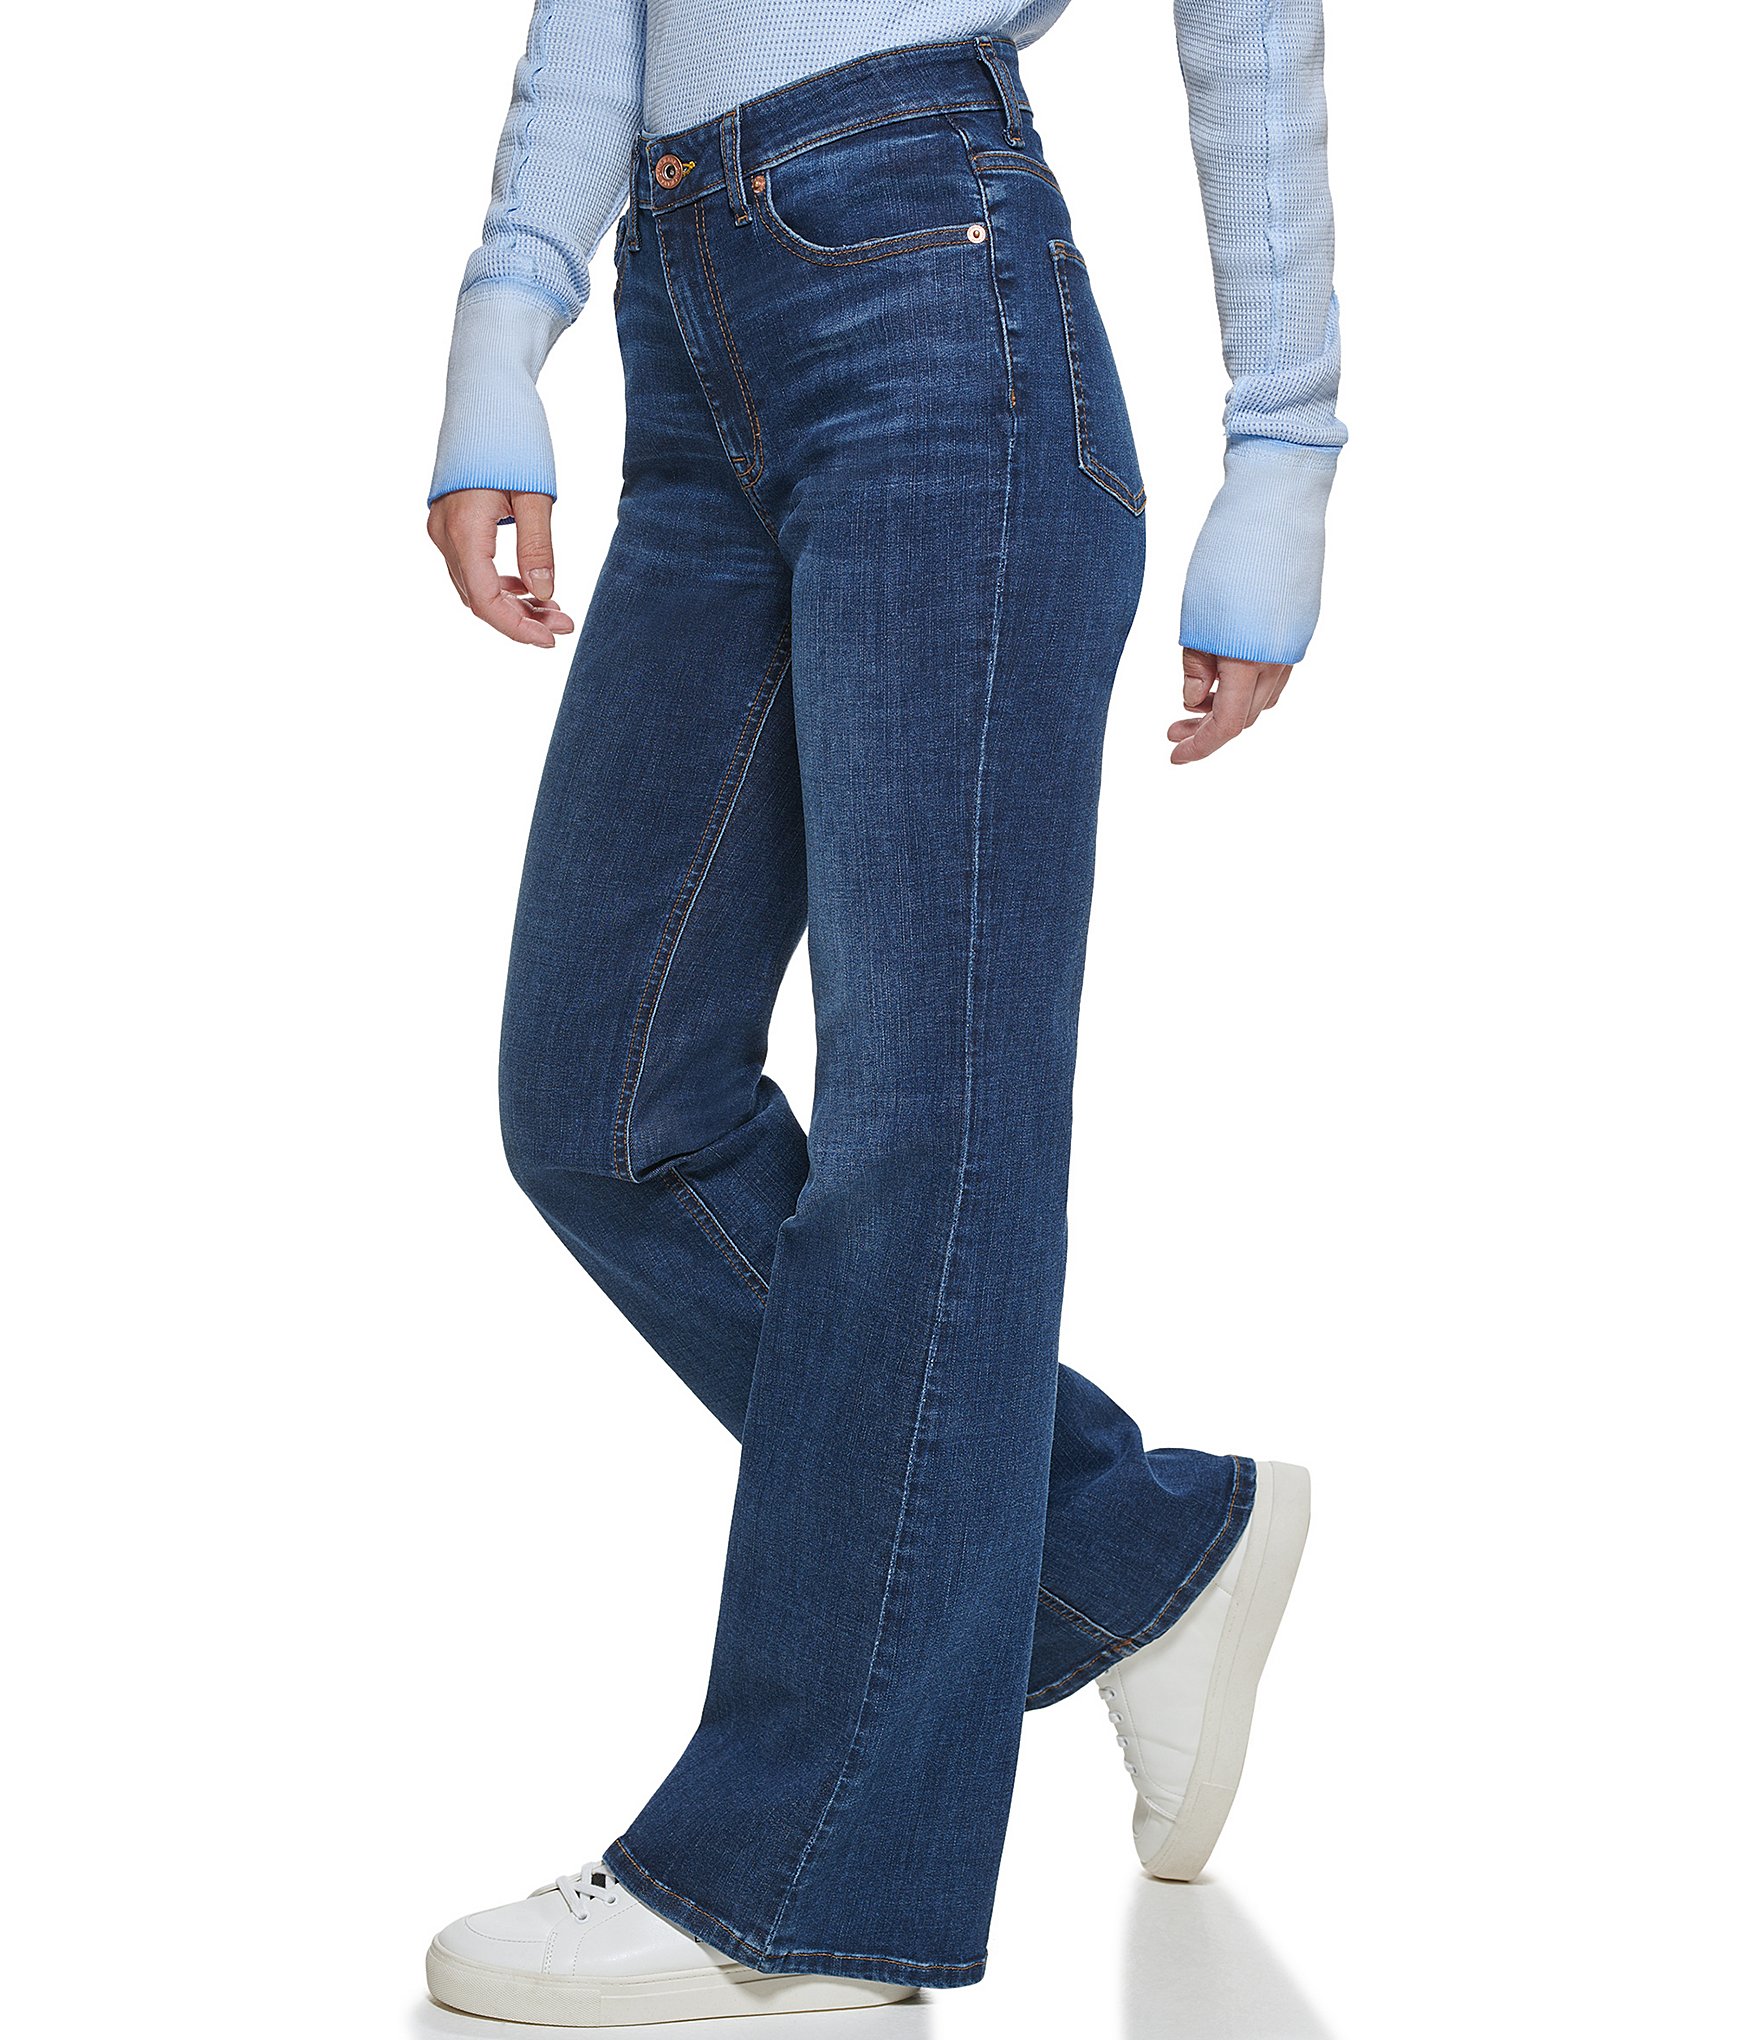 Moment Scholar Edition DKNY Jeans Boerum High Rise Flare Leg Stretch Denim Jeans | Dillard's